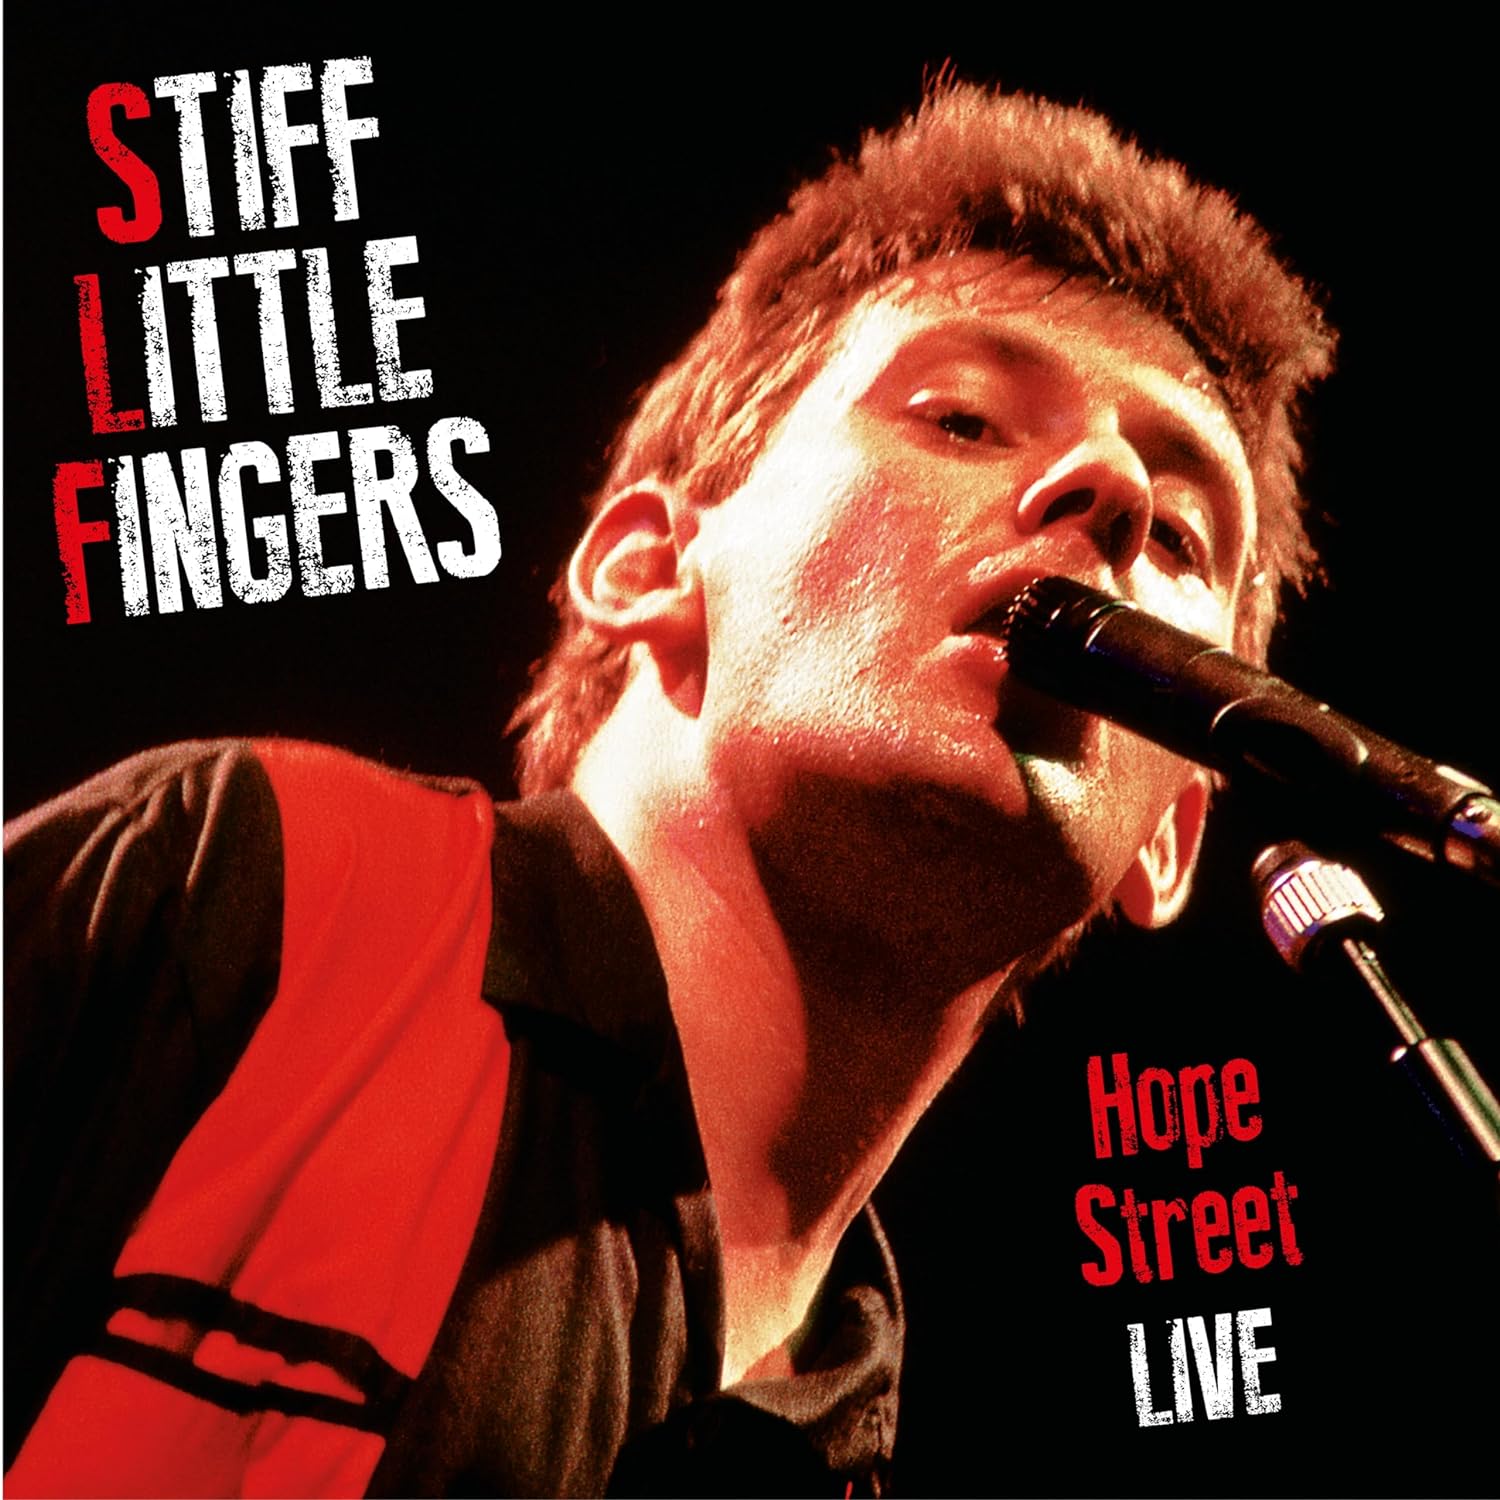 Stiff Little Fingers "Hope Street Live" 2x12" Vinyl - PRE-ORDER